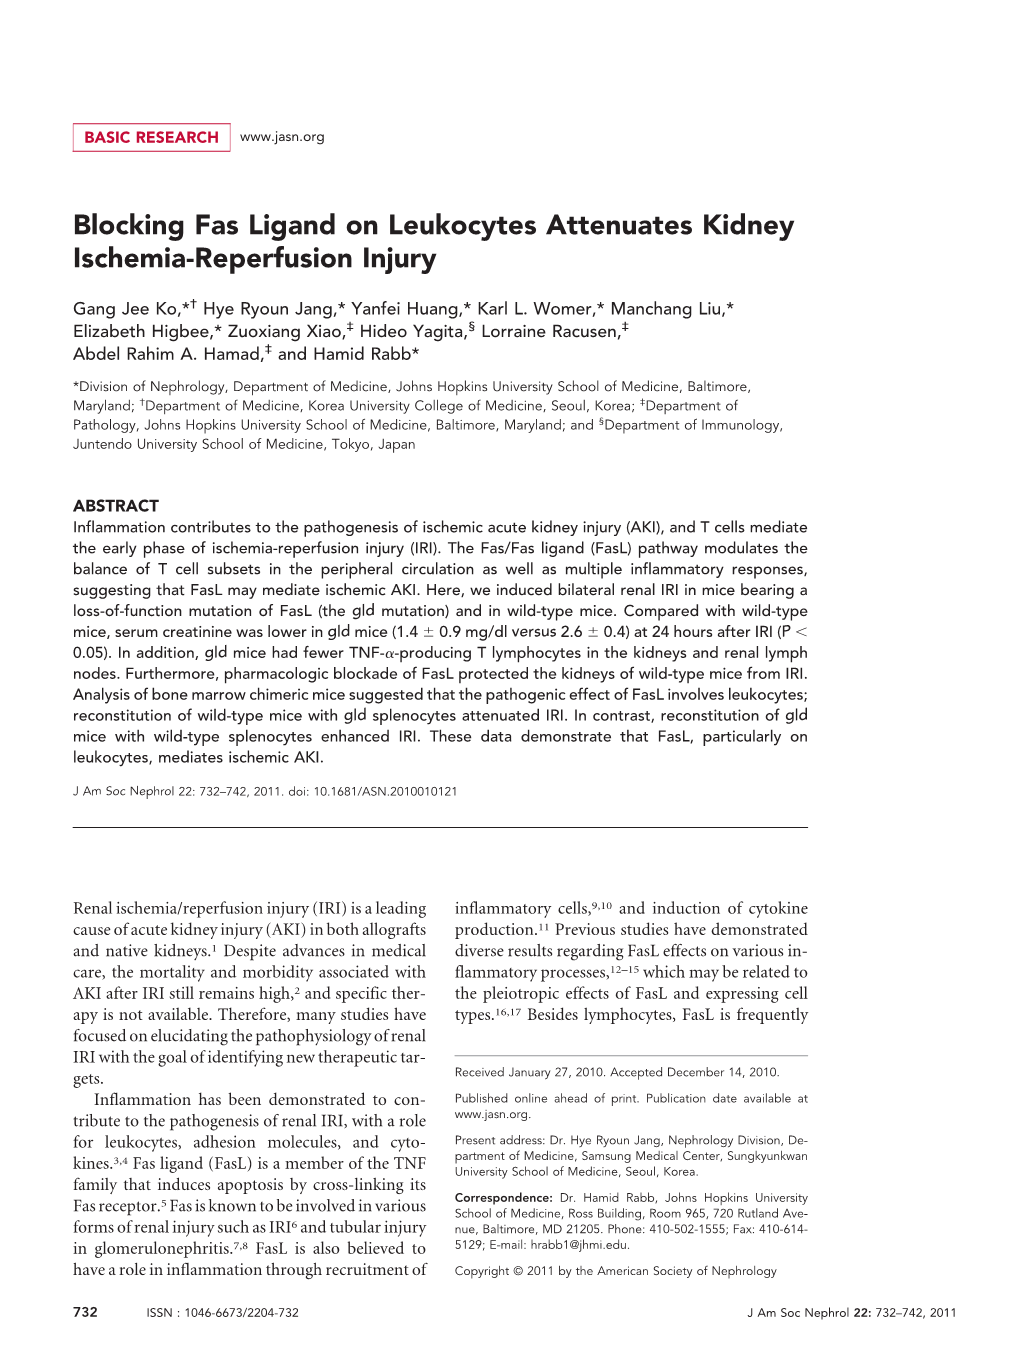 Blocking Fas Ligand on Leukocytes Attenuates Kidney Ischemia-Reperfusion Injury